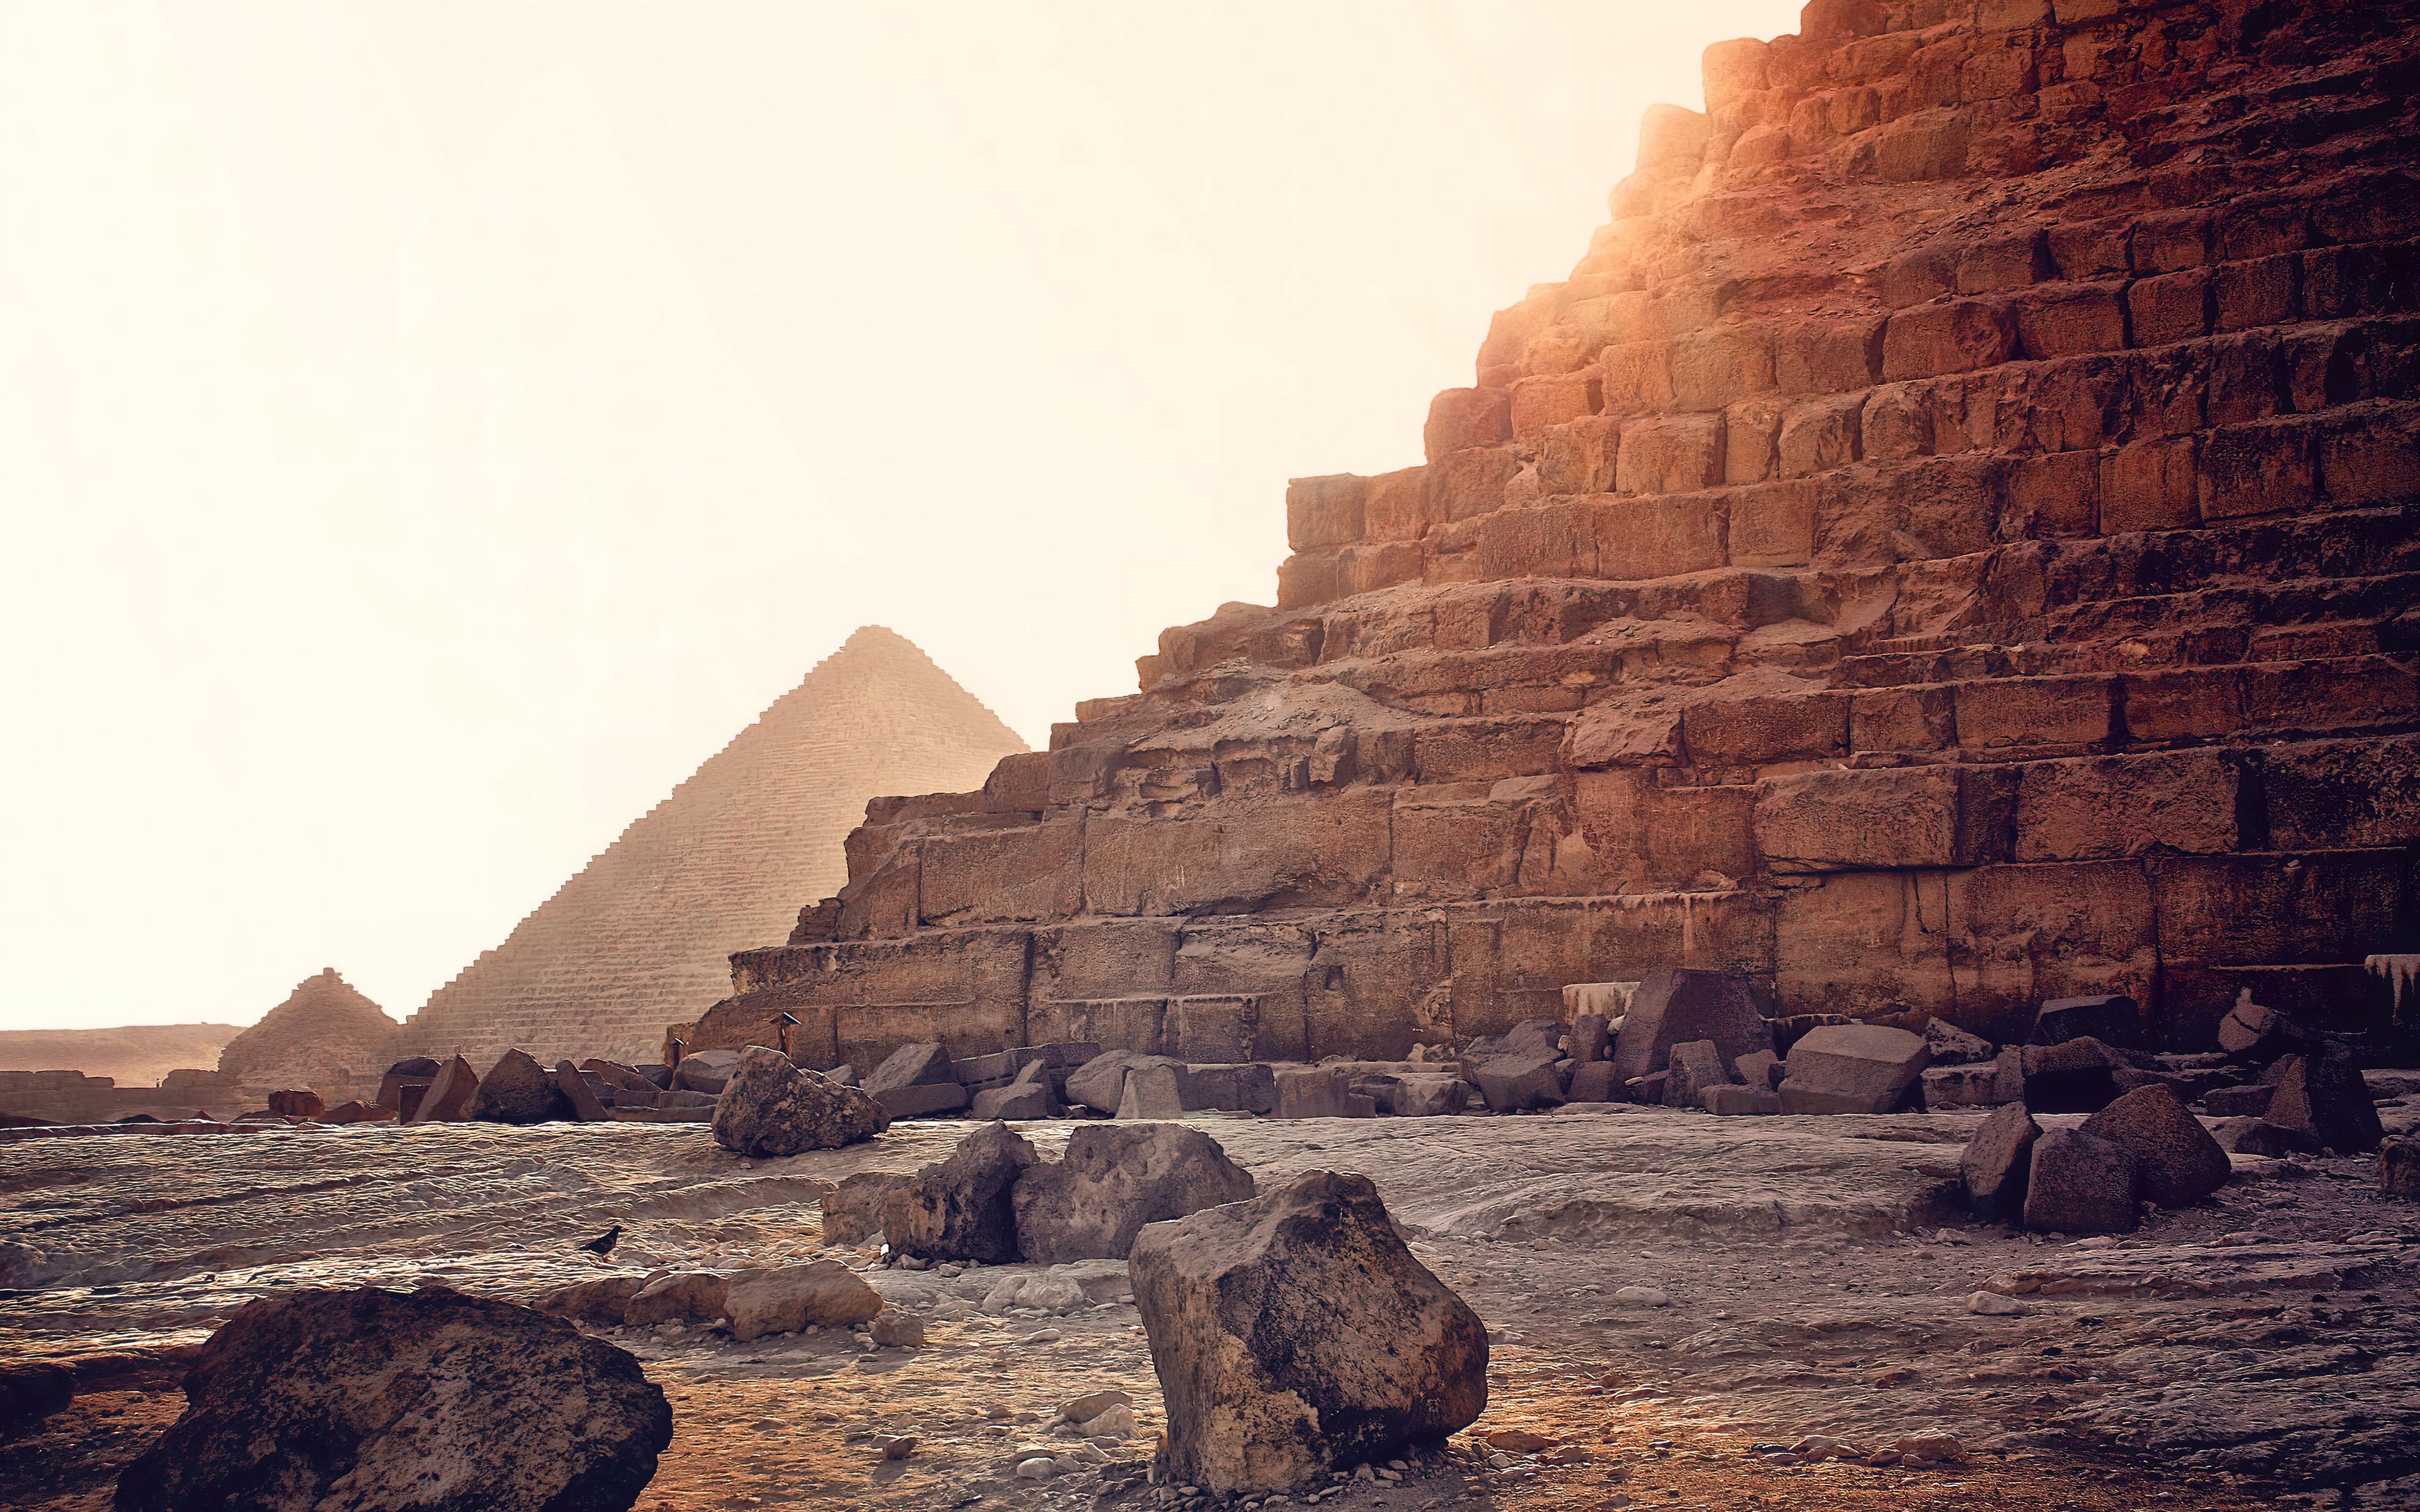 Download wallpaper 3840x2400 pyramid, stones, desert, egypt 4k ultra hd  16:10 hd background